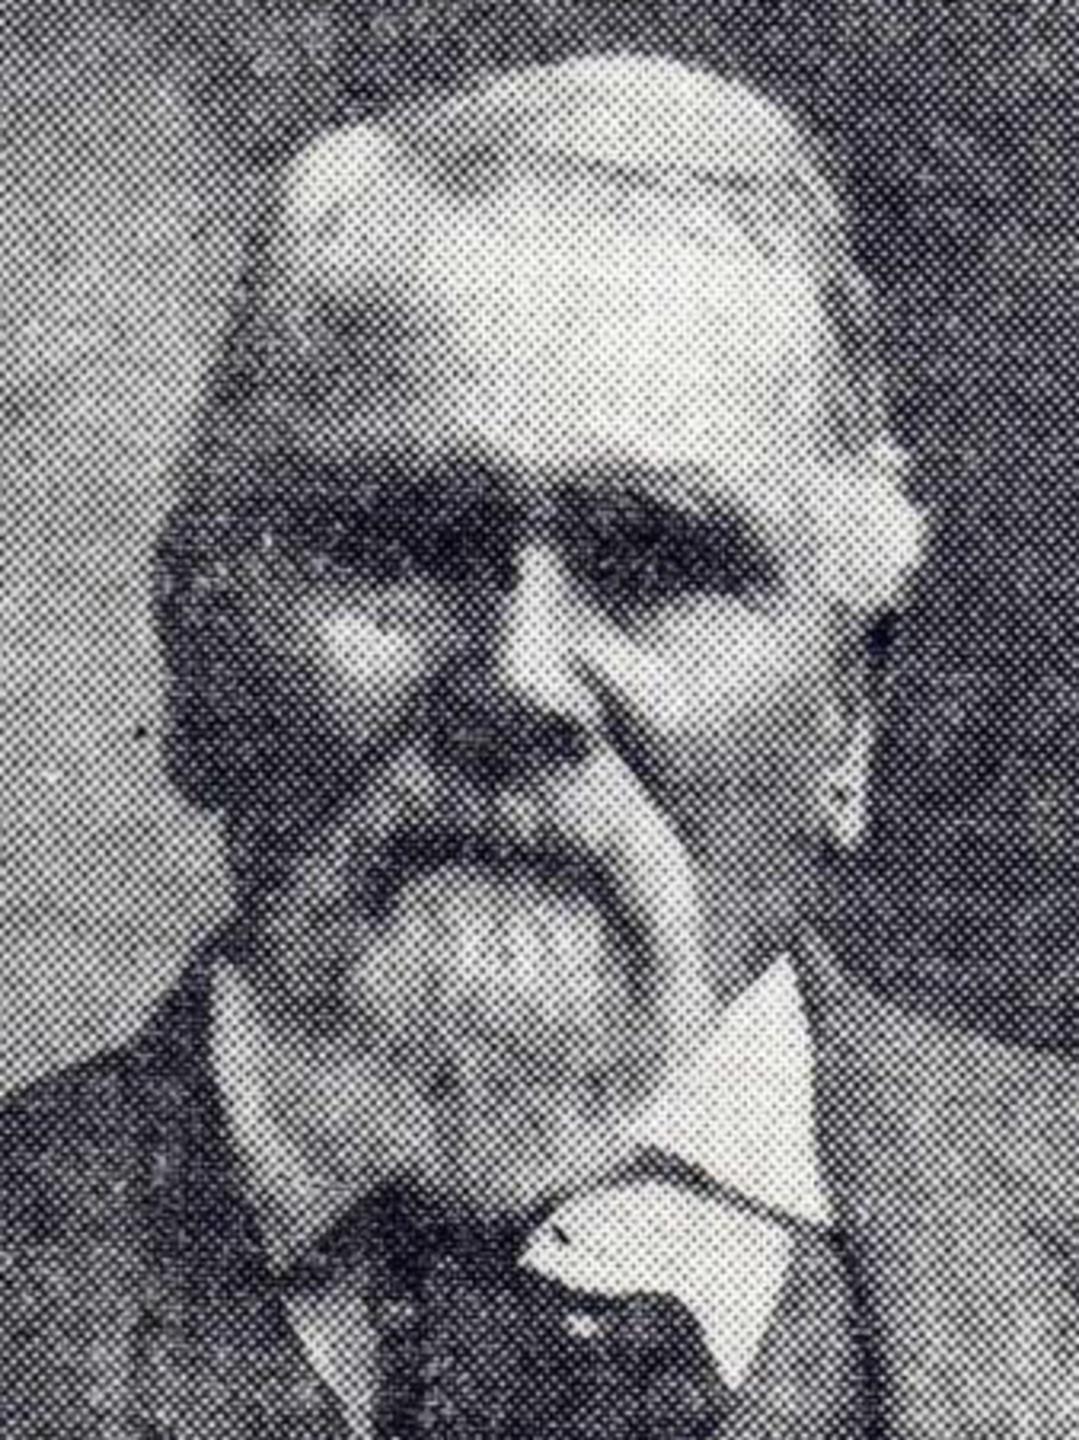 James Monroe West (1825 - 1905) Profile